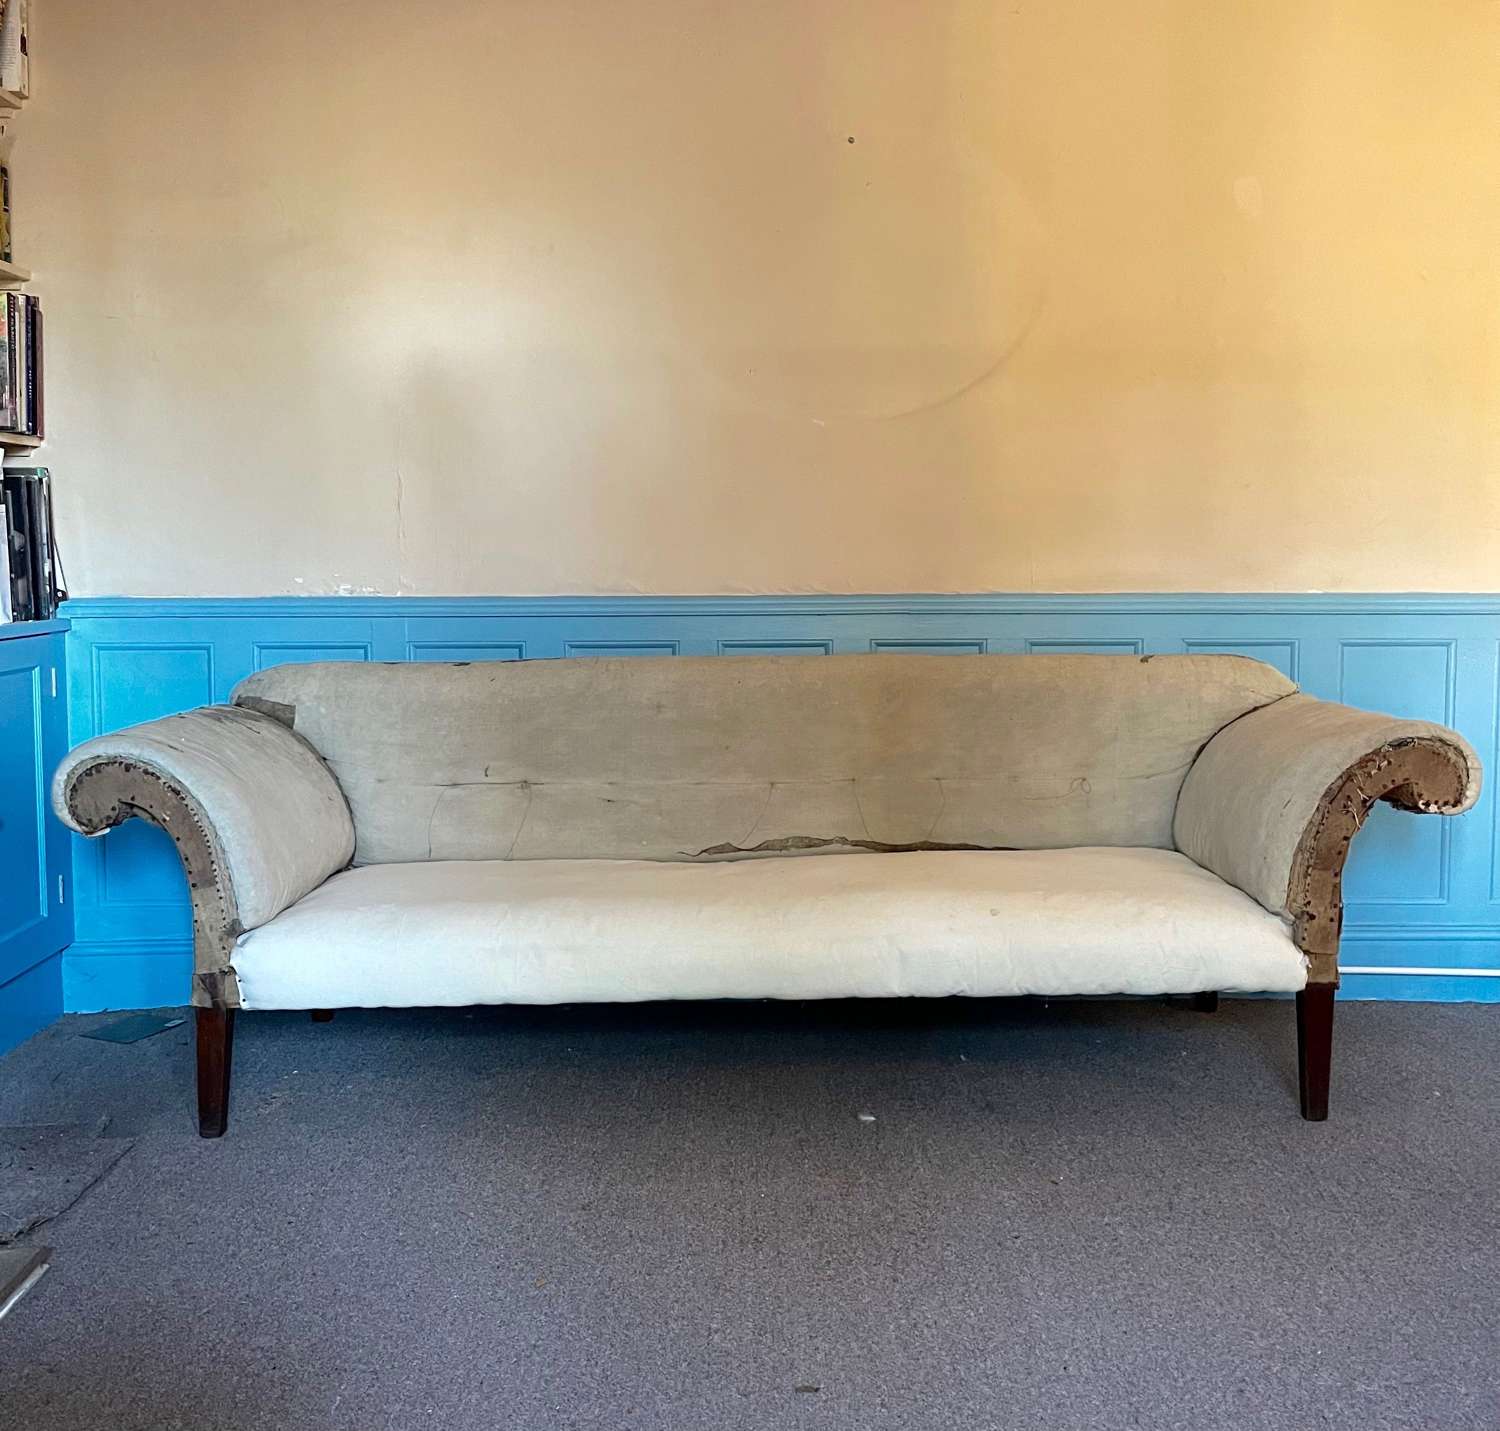 A 19th century sofa